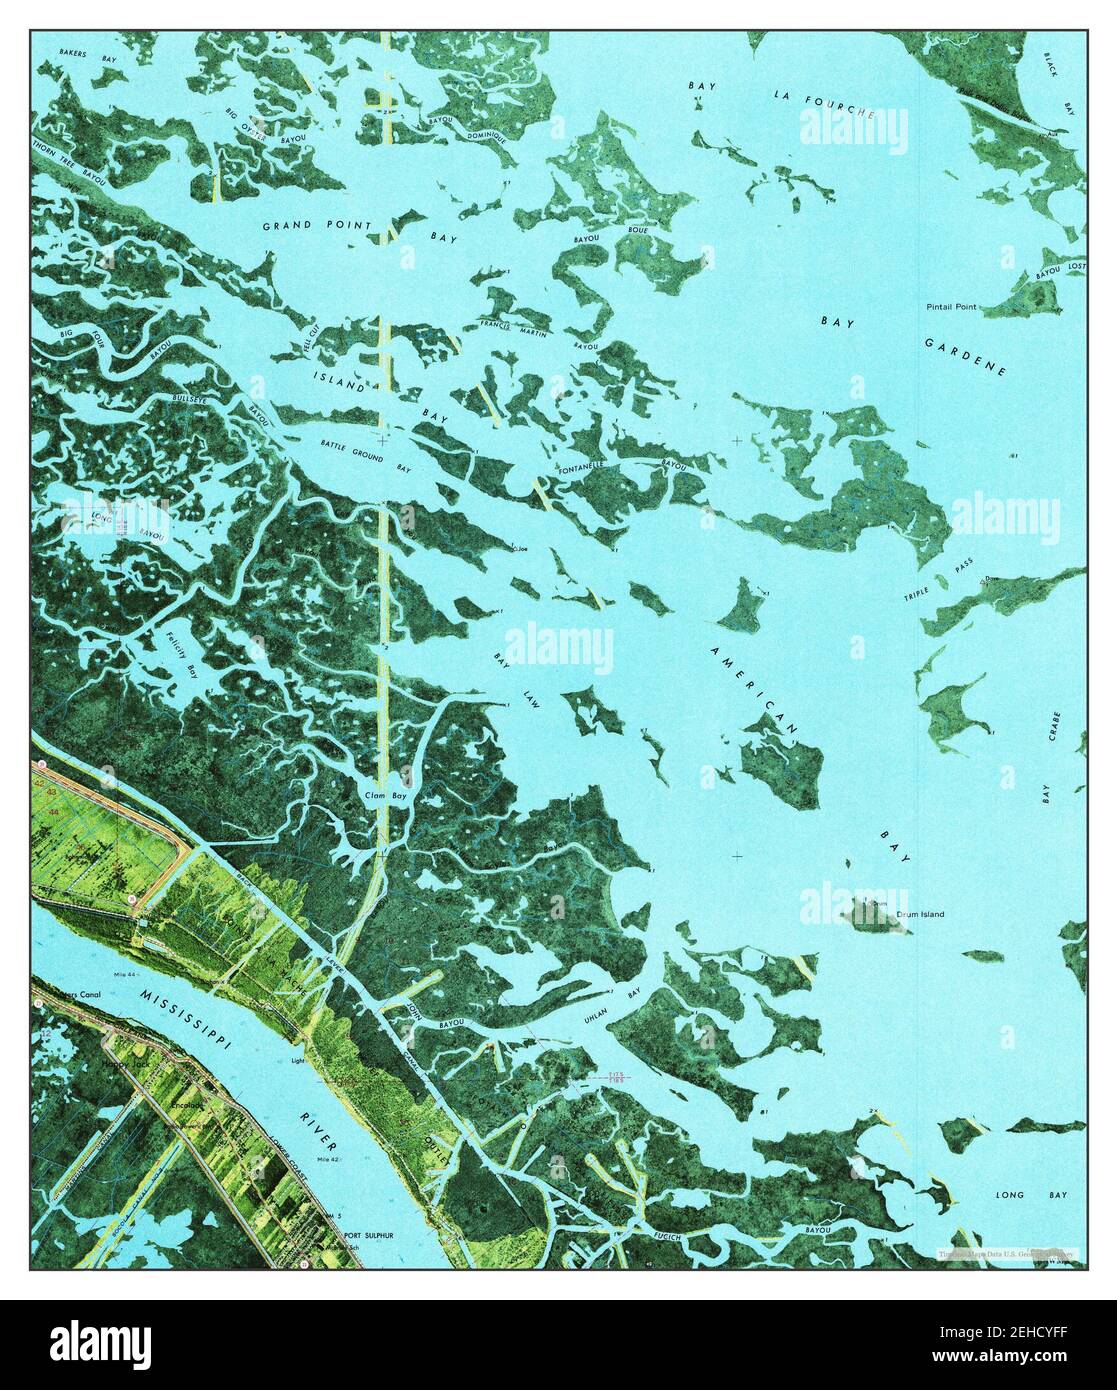 Hanna, Louisiana, map 1992, 1:24000, United States of America by Timeless Maps, data U.S. Geological Survey Stock Photo